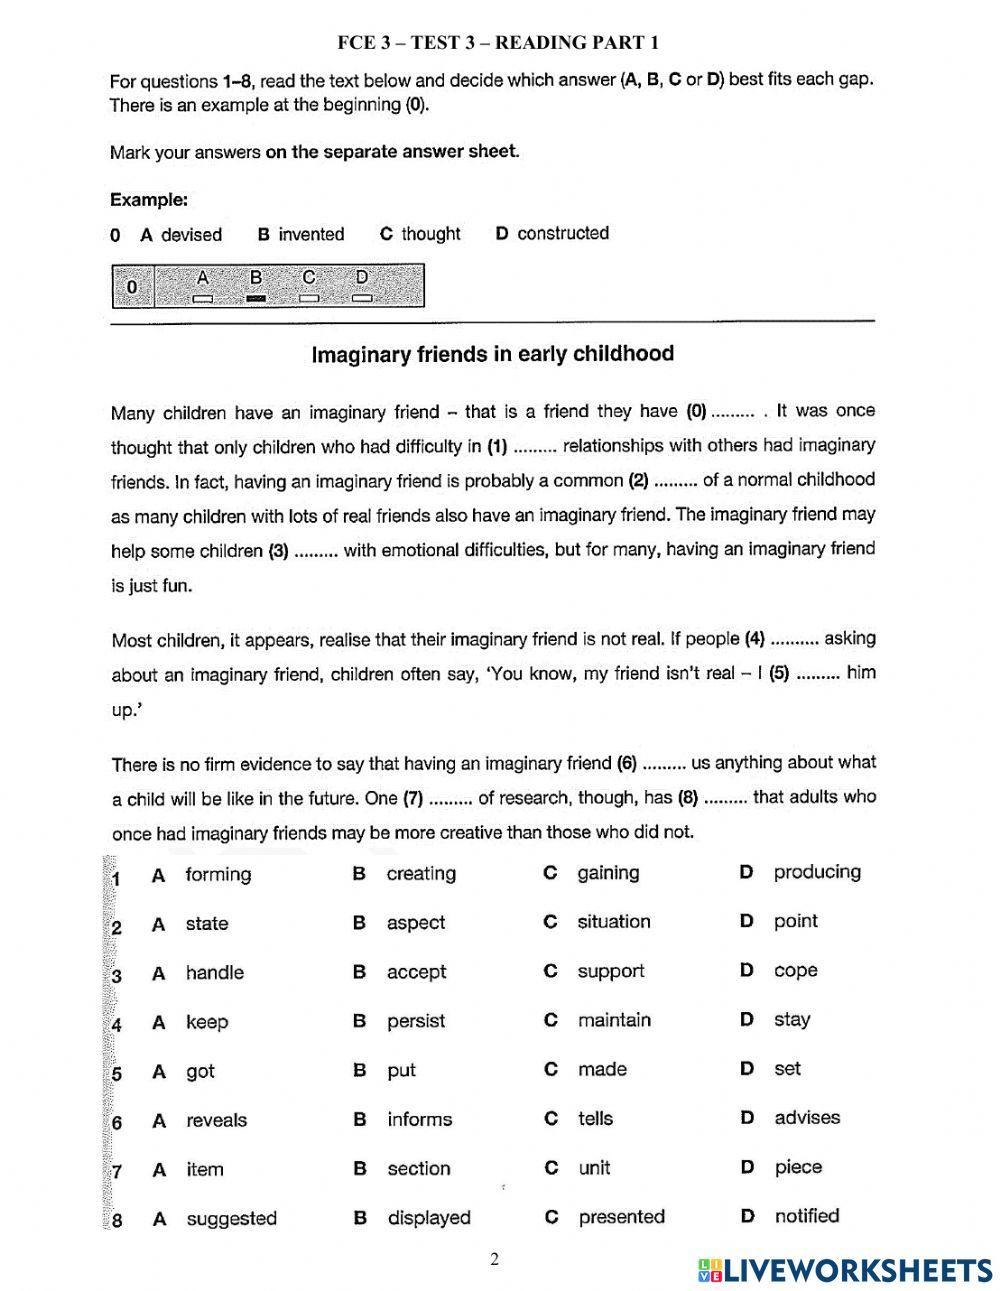 Foreign teacher-S8-Week 19-FCE Practice worksheet | Live Worksheets